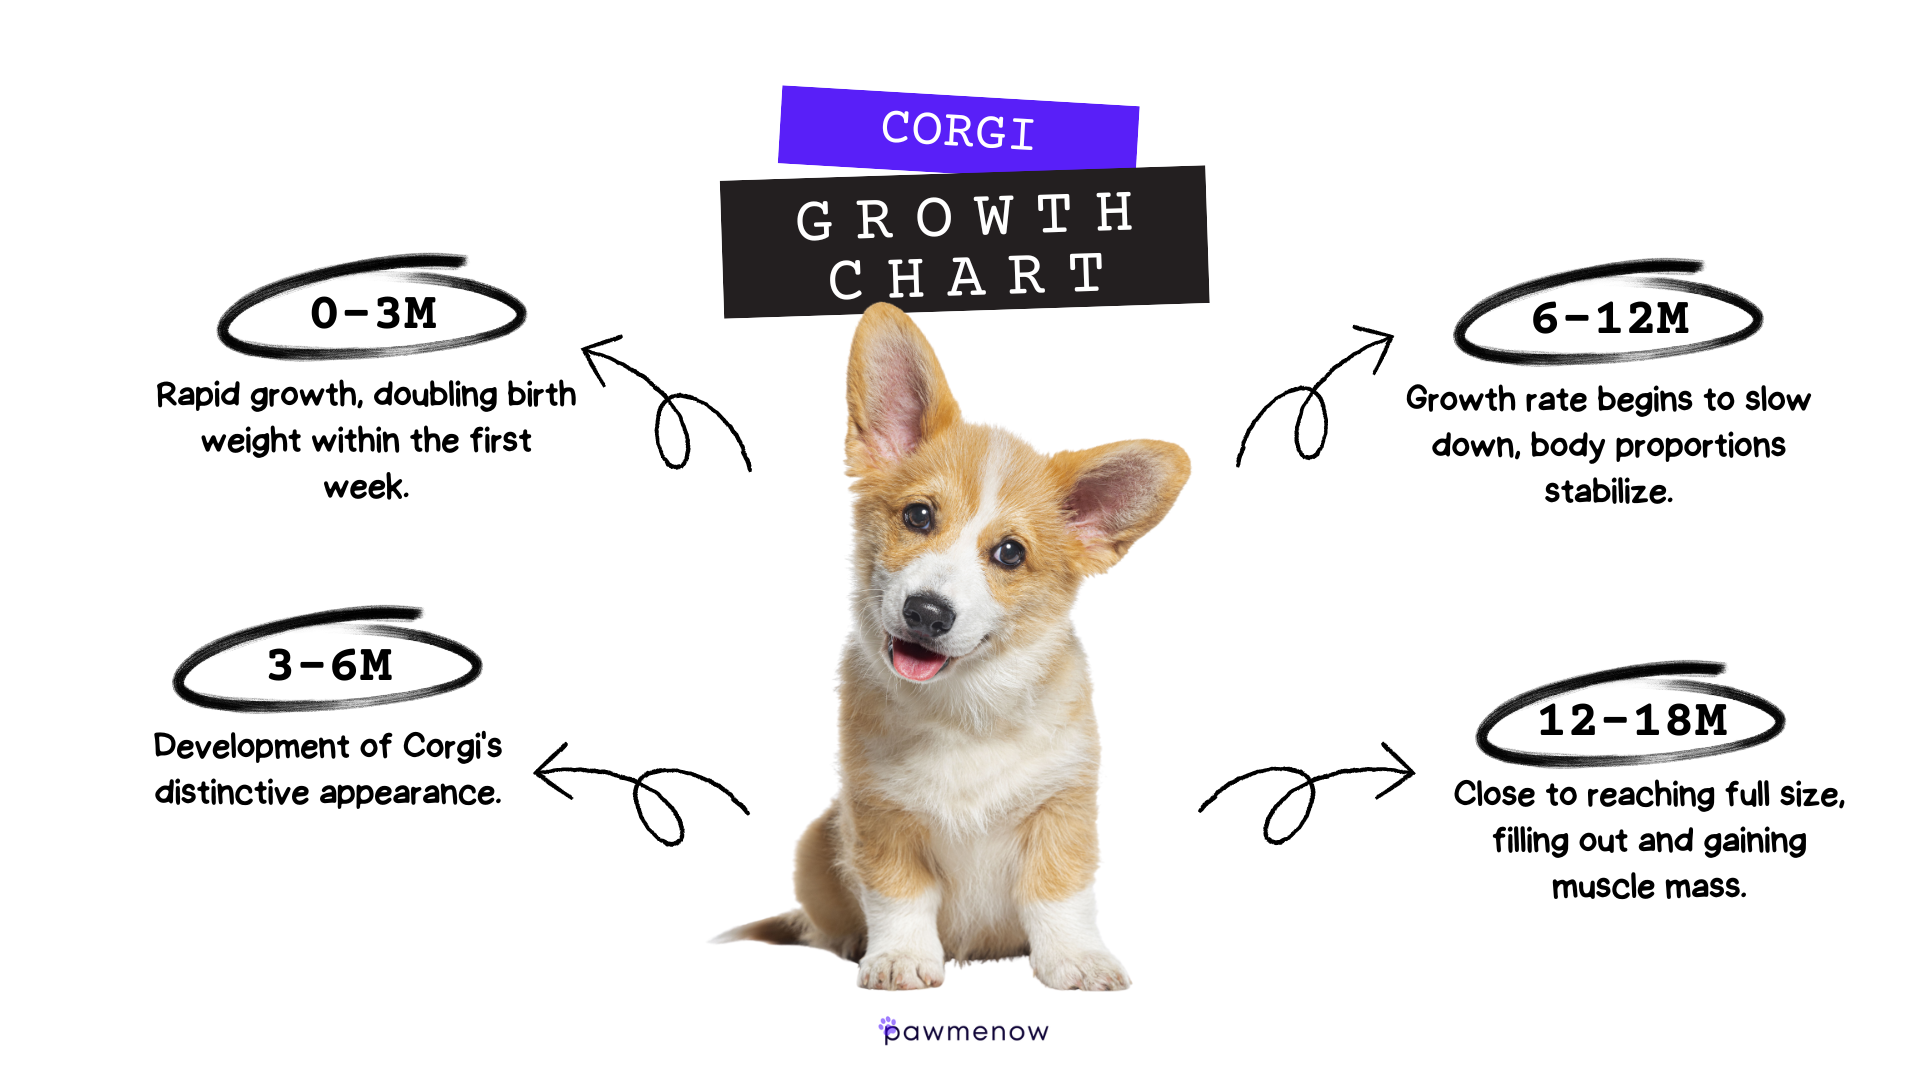 Corgi Growth Chart